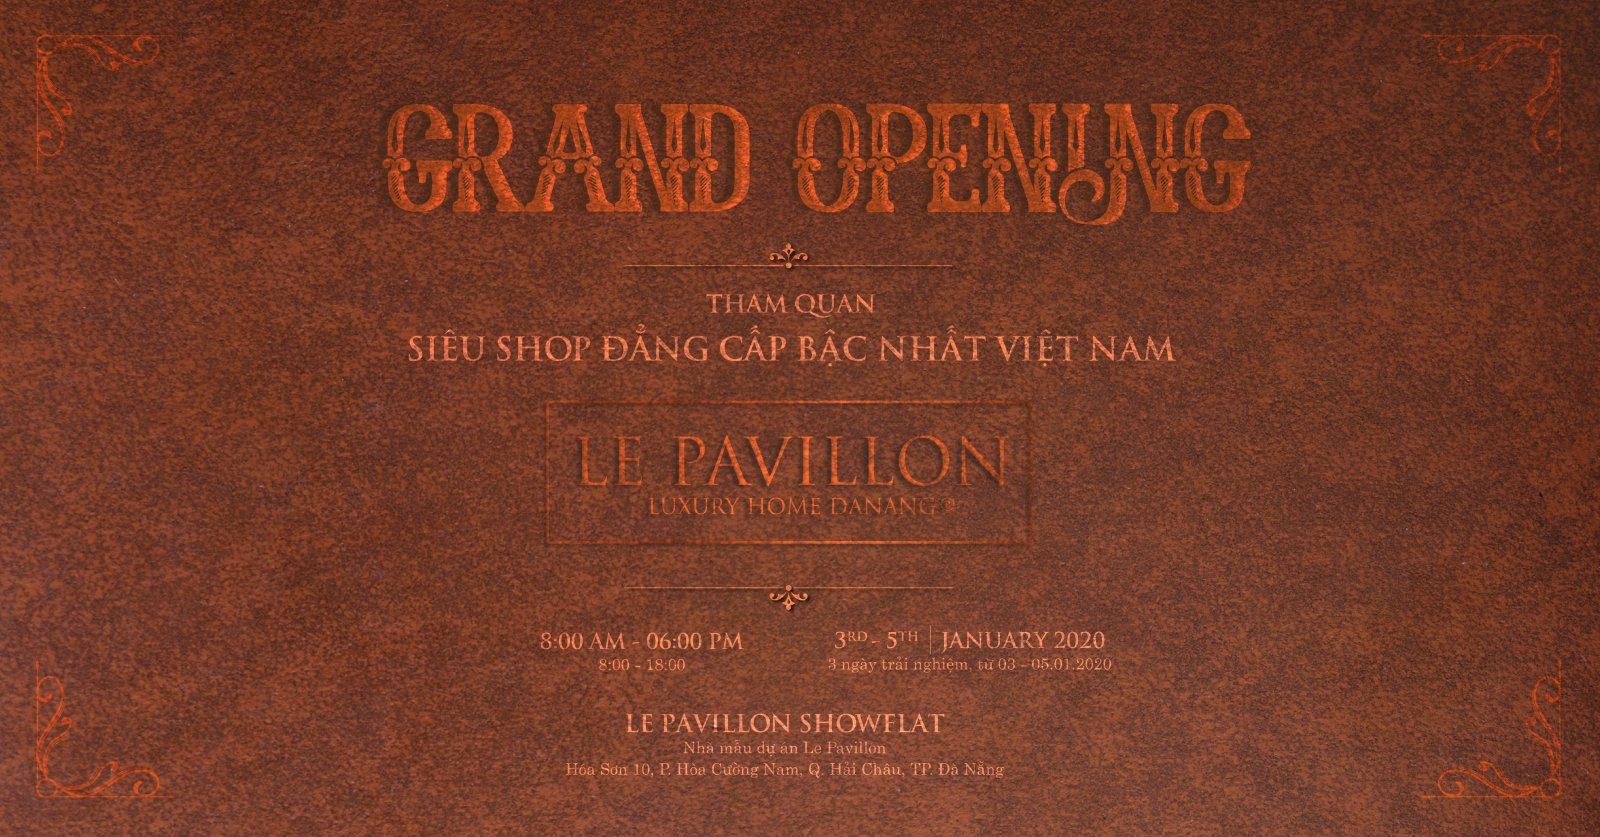 Grand Opening Le Pavillon Luxury Home Da Nang